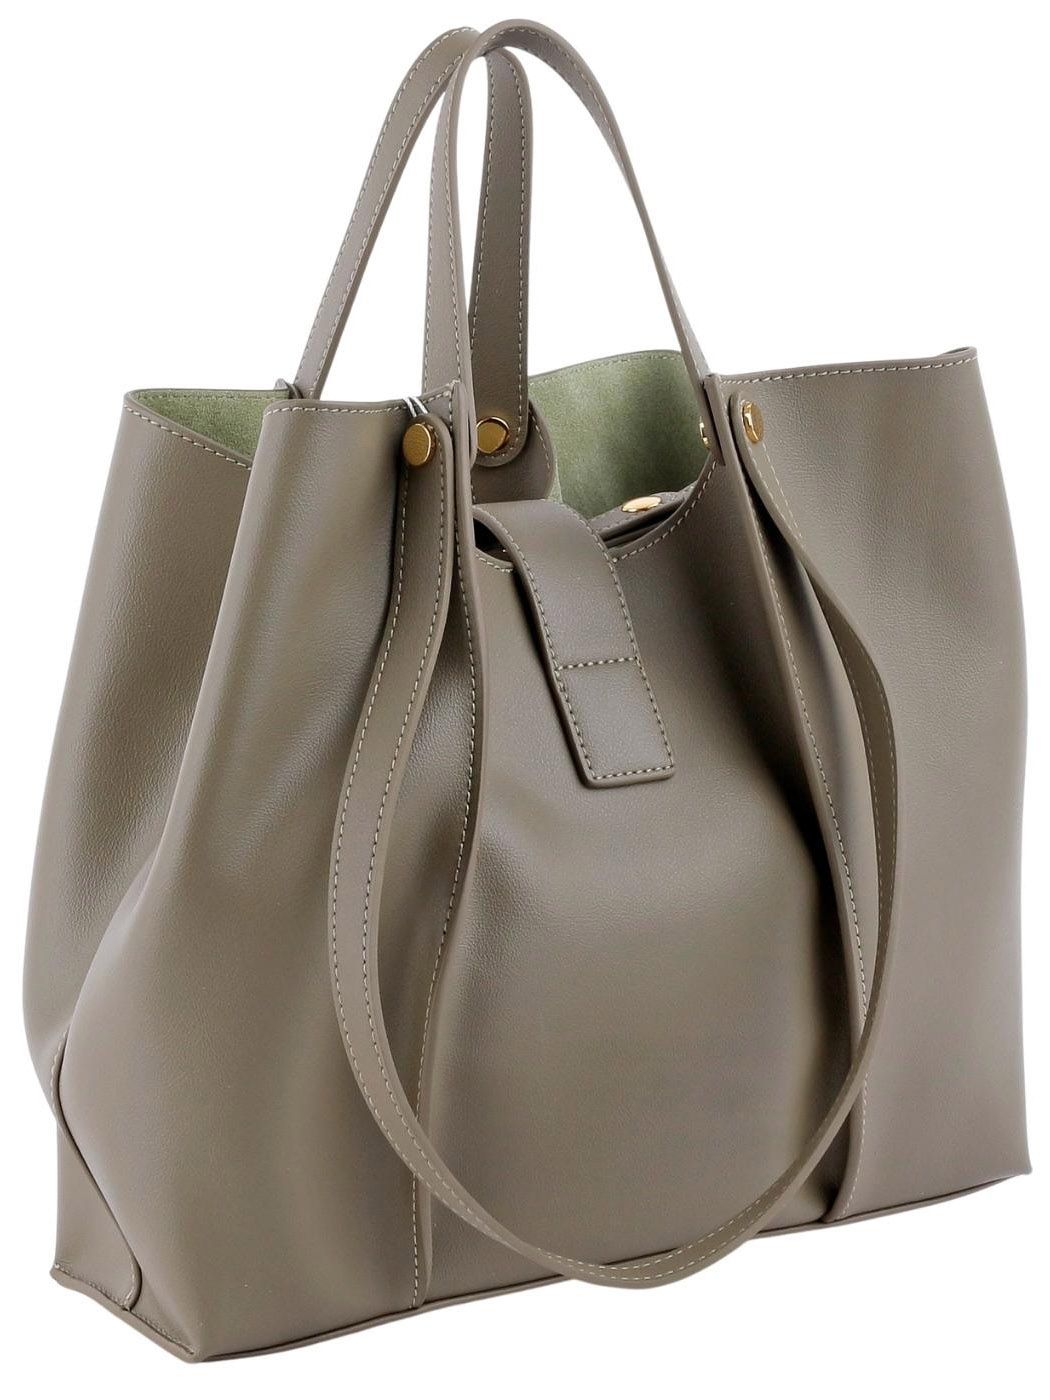 7258 HS зелен сумка  жен. дем. натуральная кожа/текстиль зеленый Helena Shine